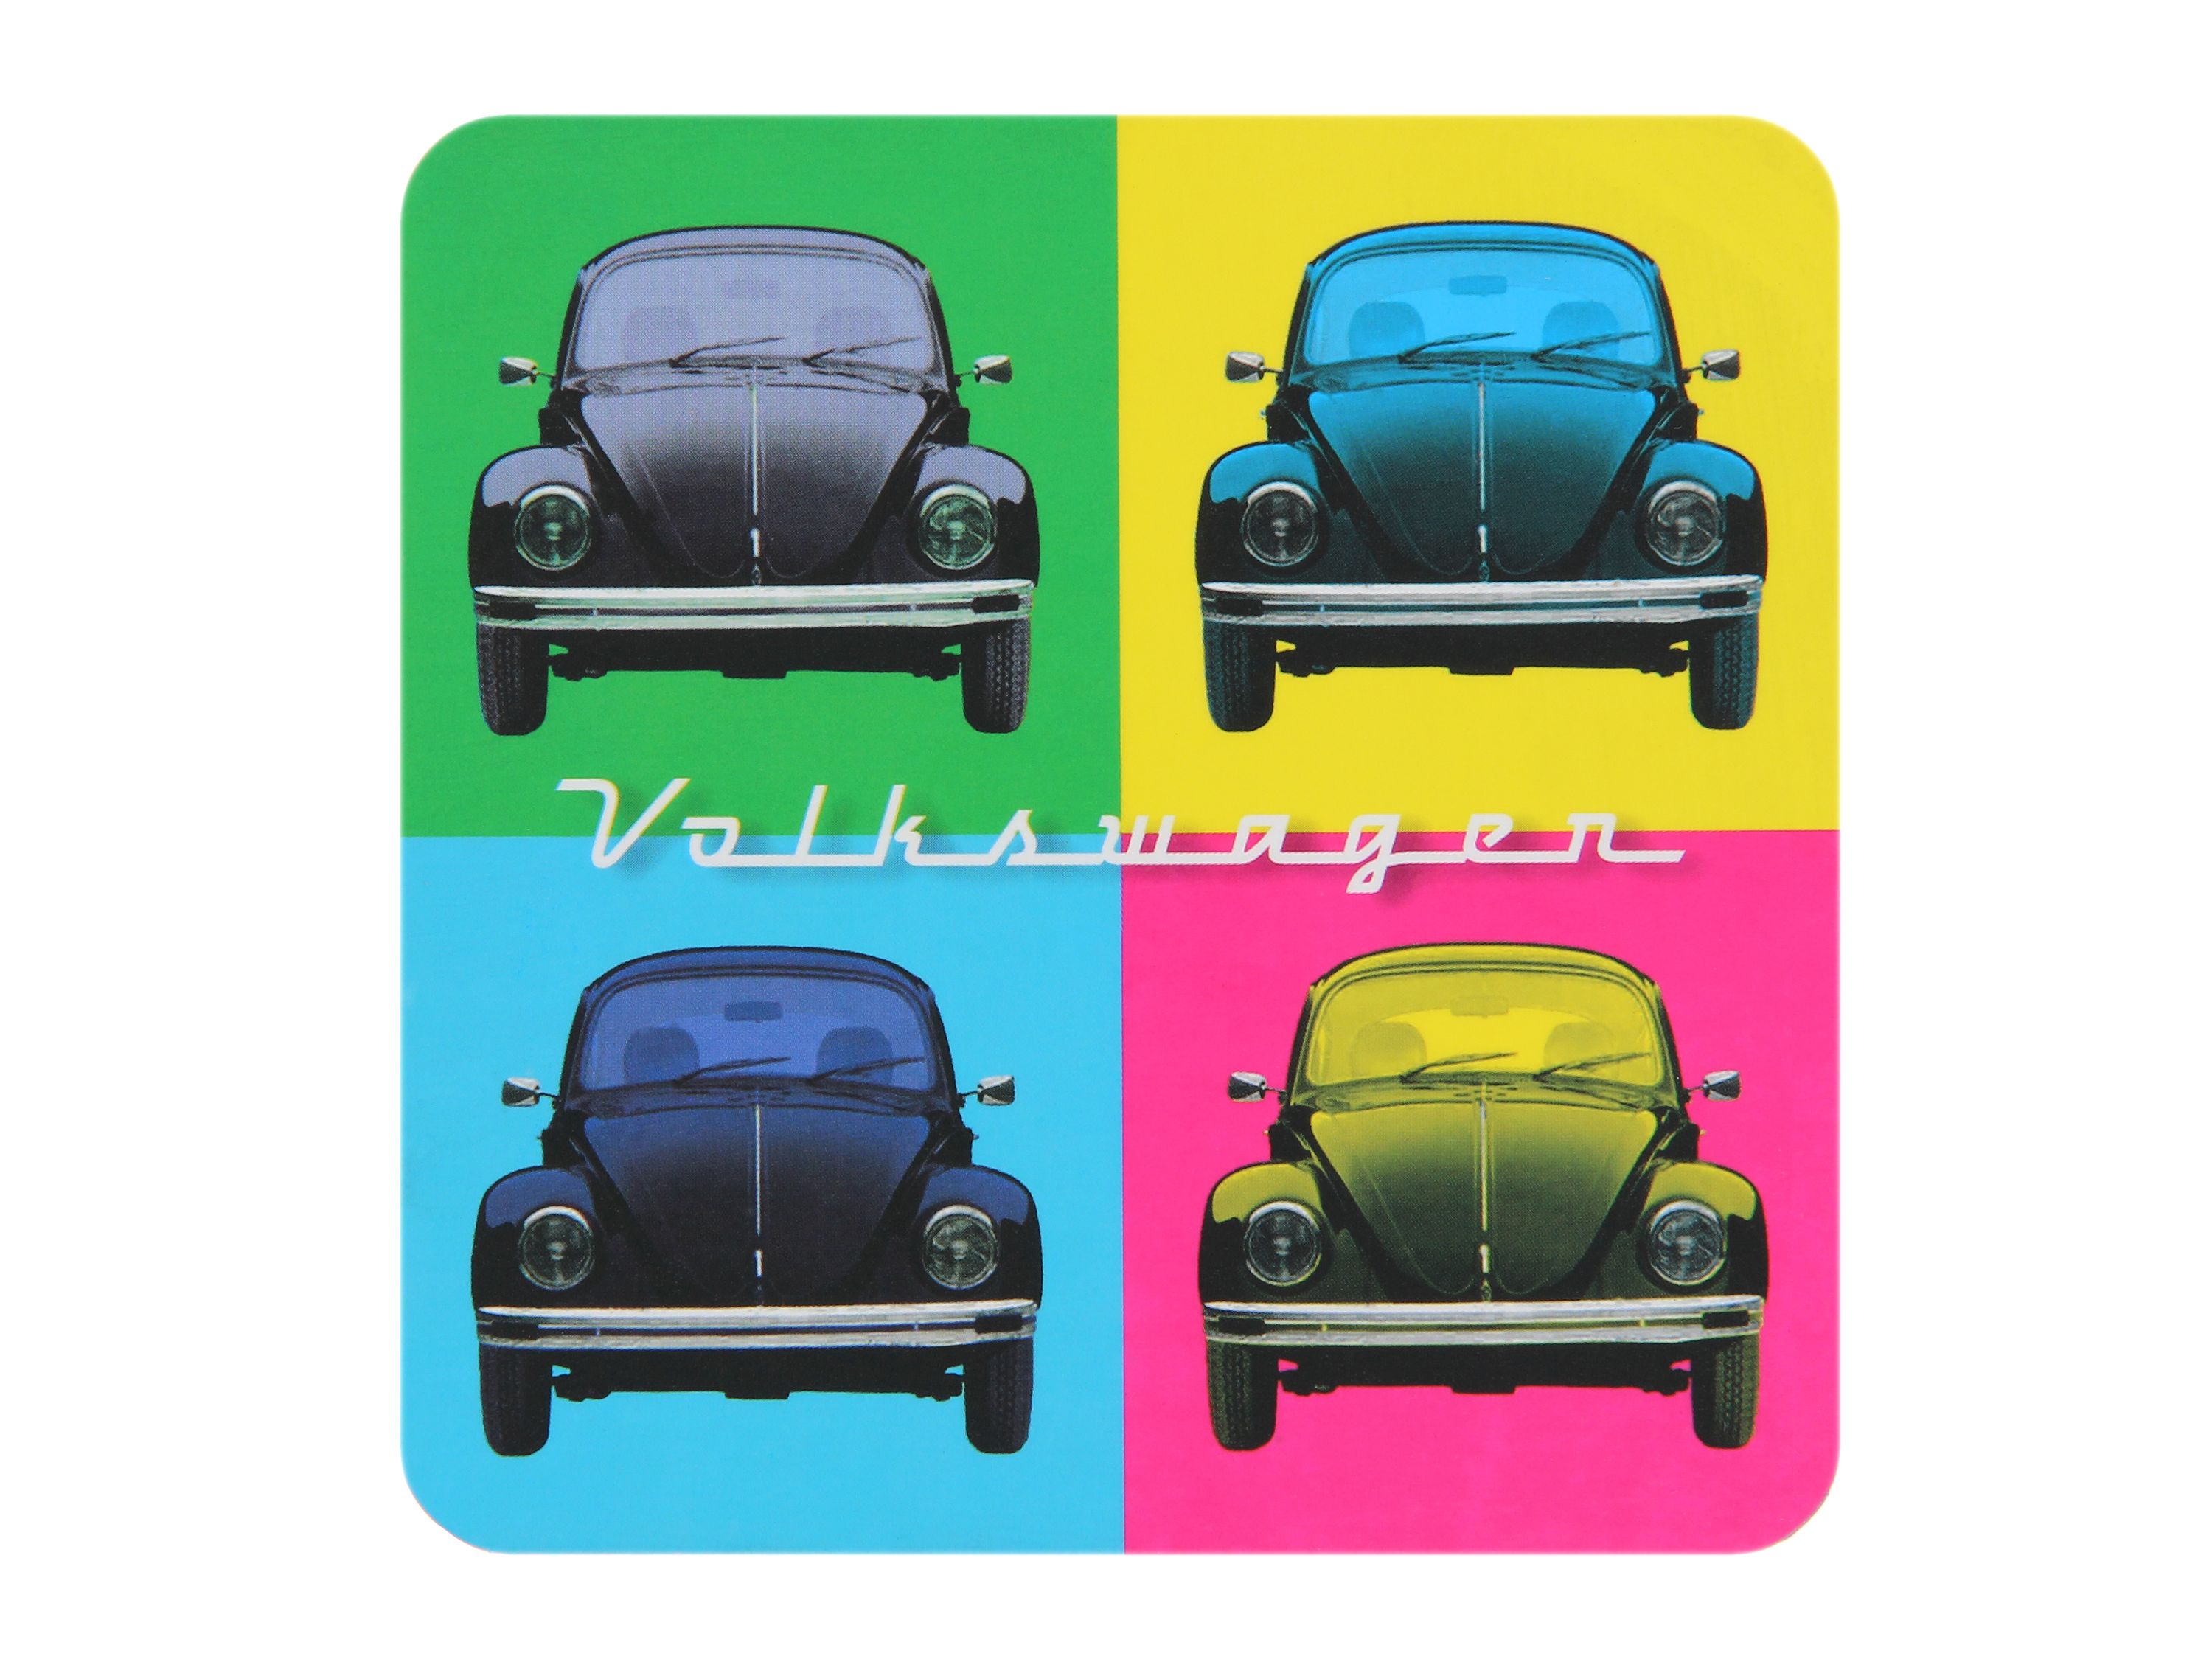 VW Beetle coaster set of 4 in cardboard slipcase - Multicolor